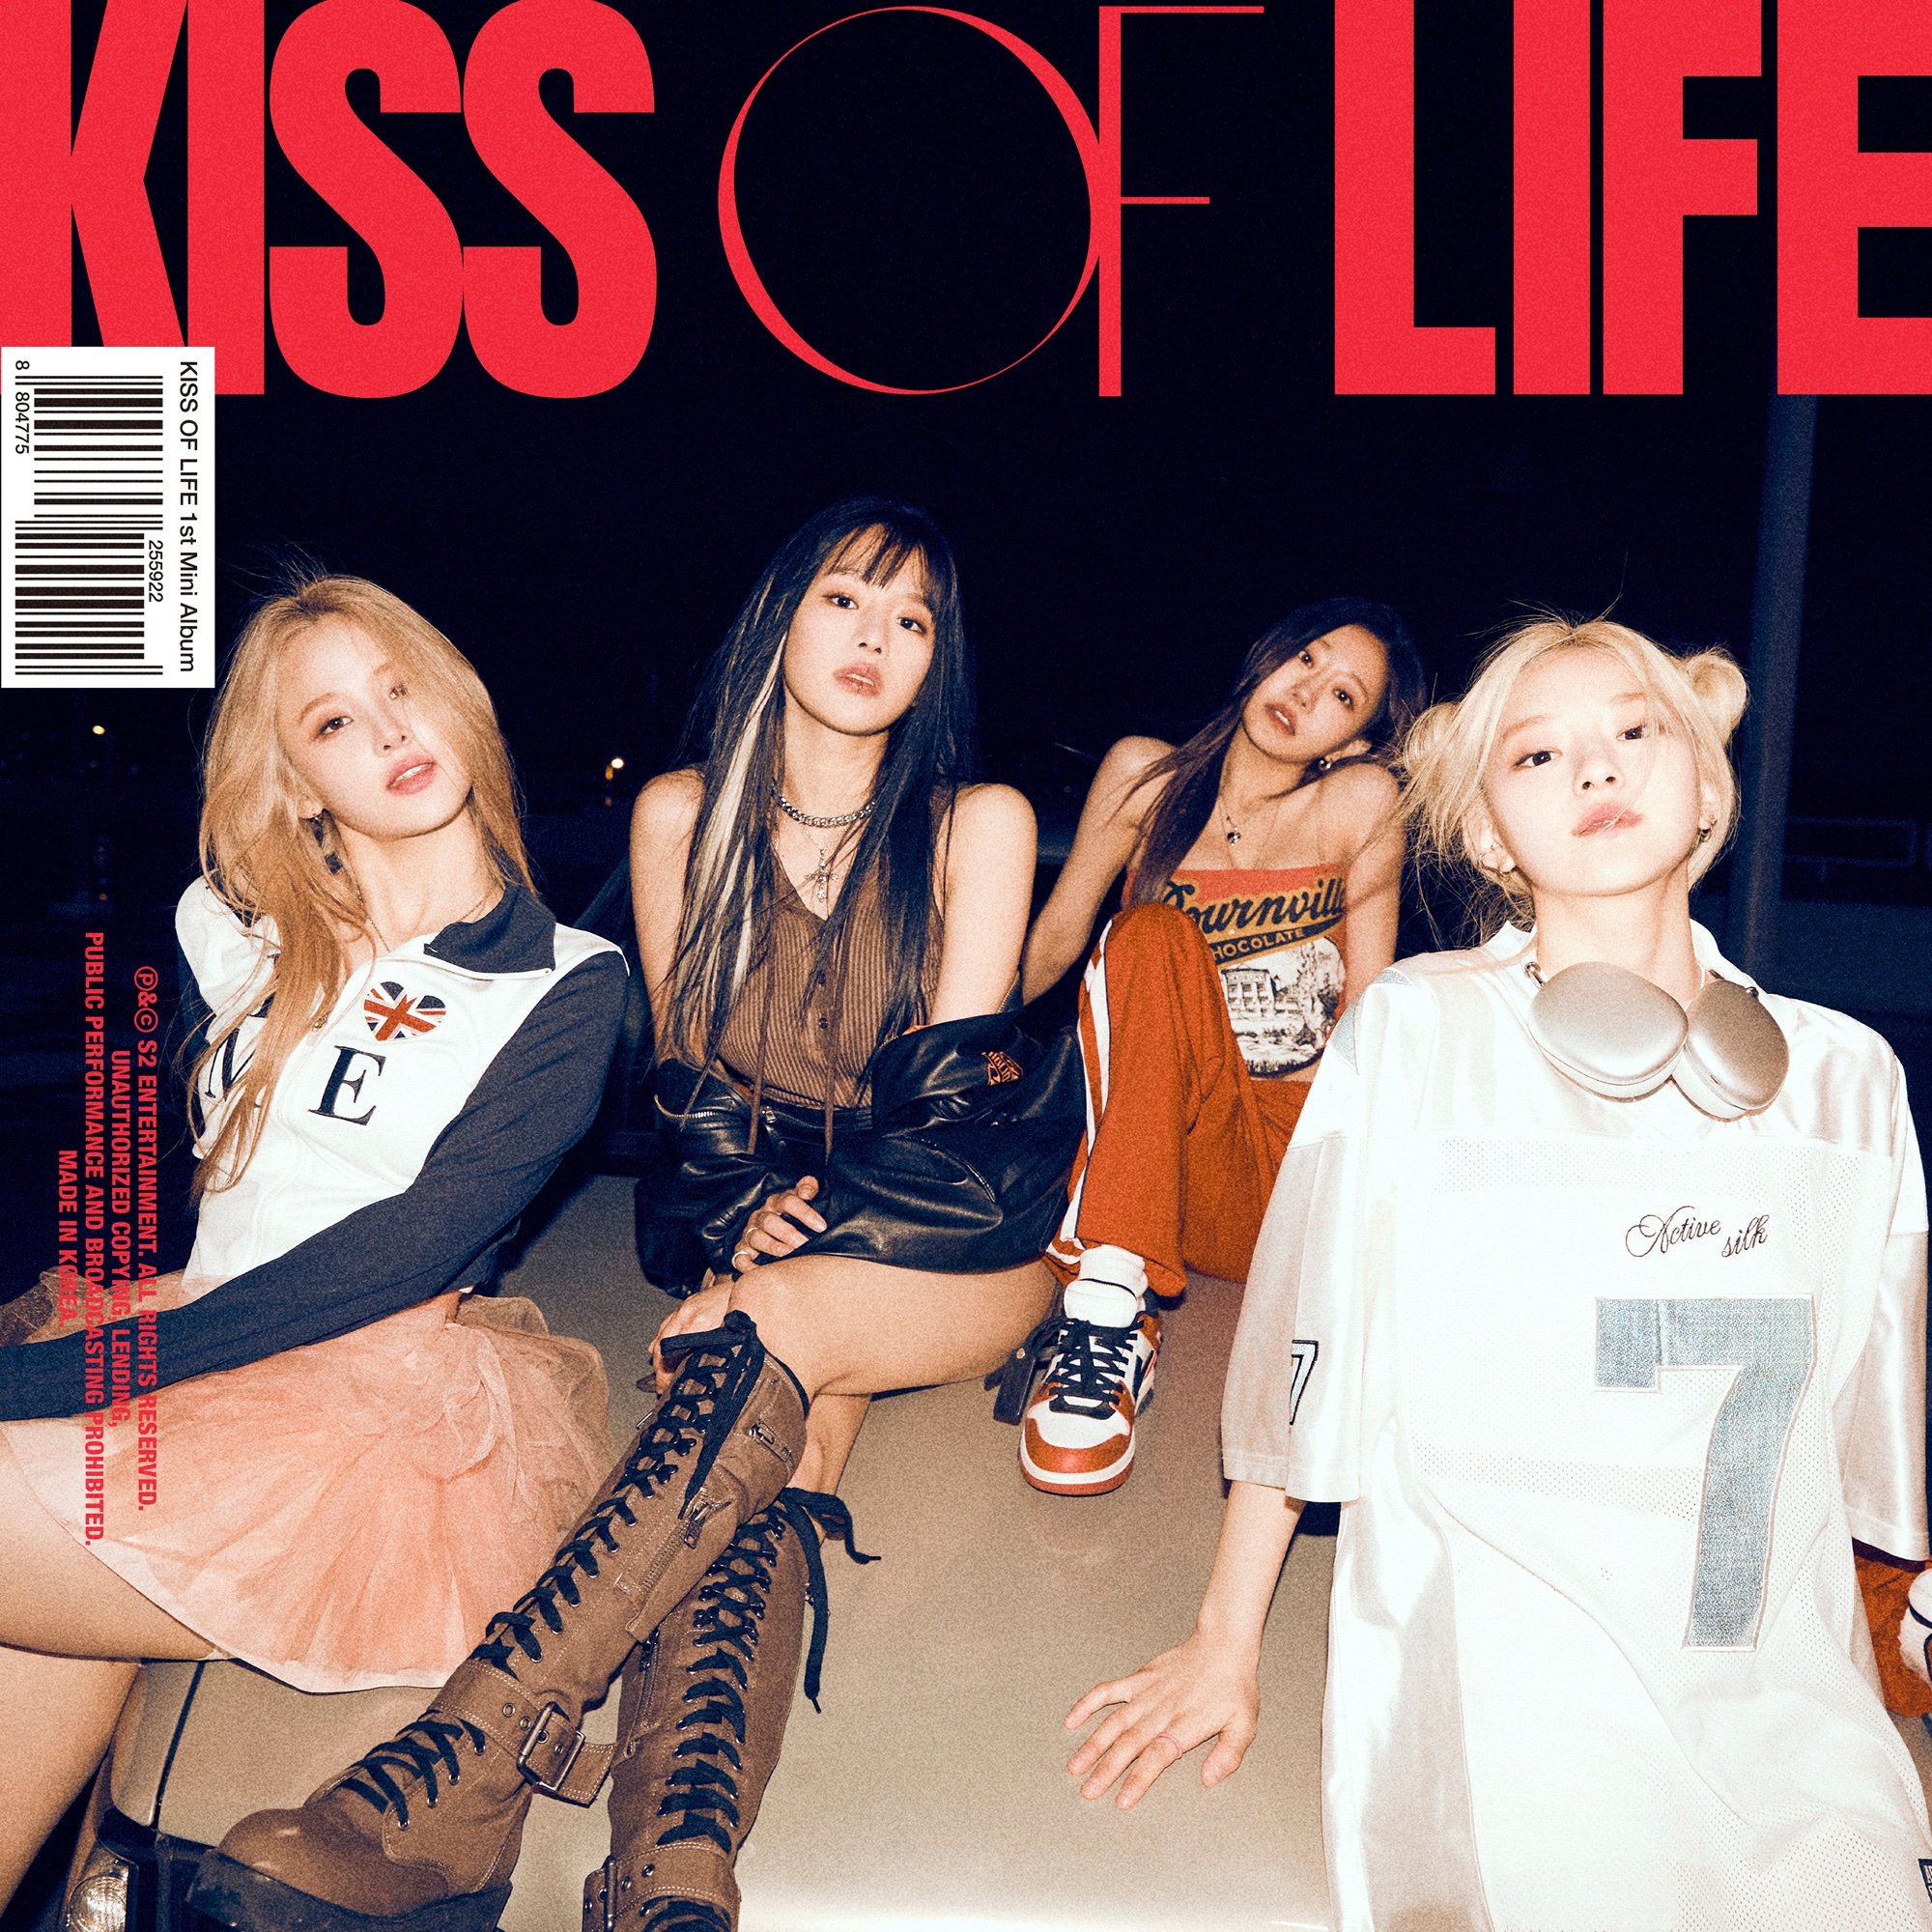 KISS OF LIFE Album Cover